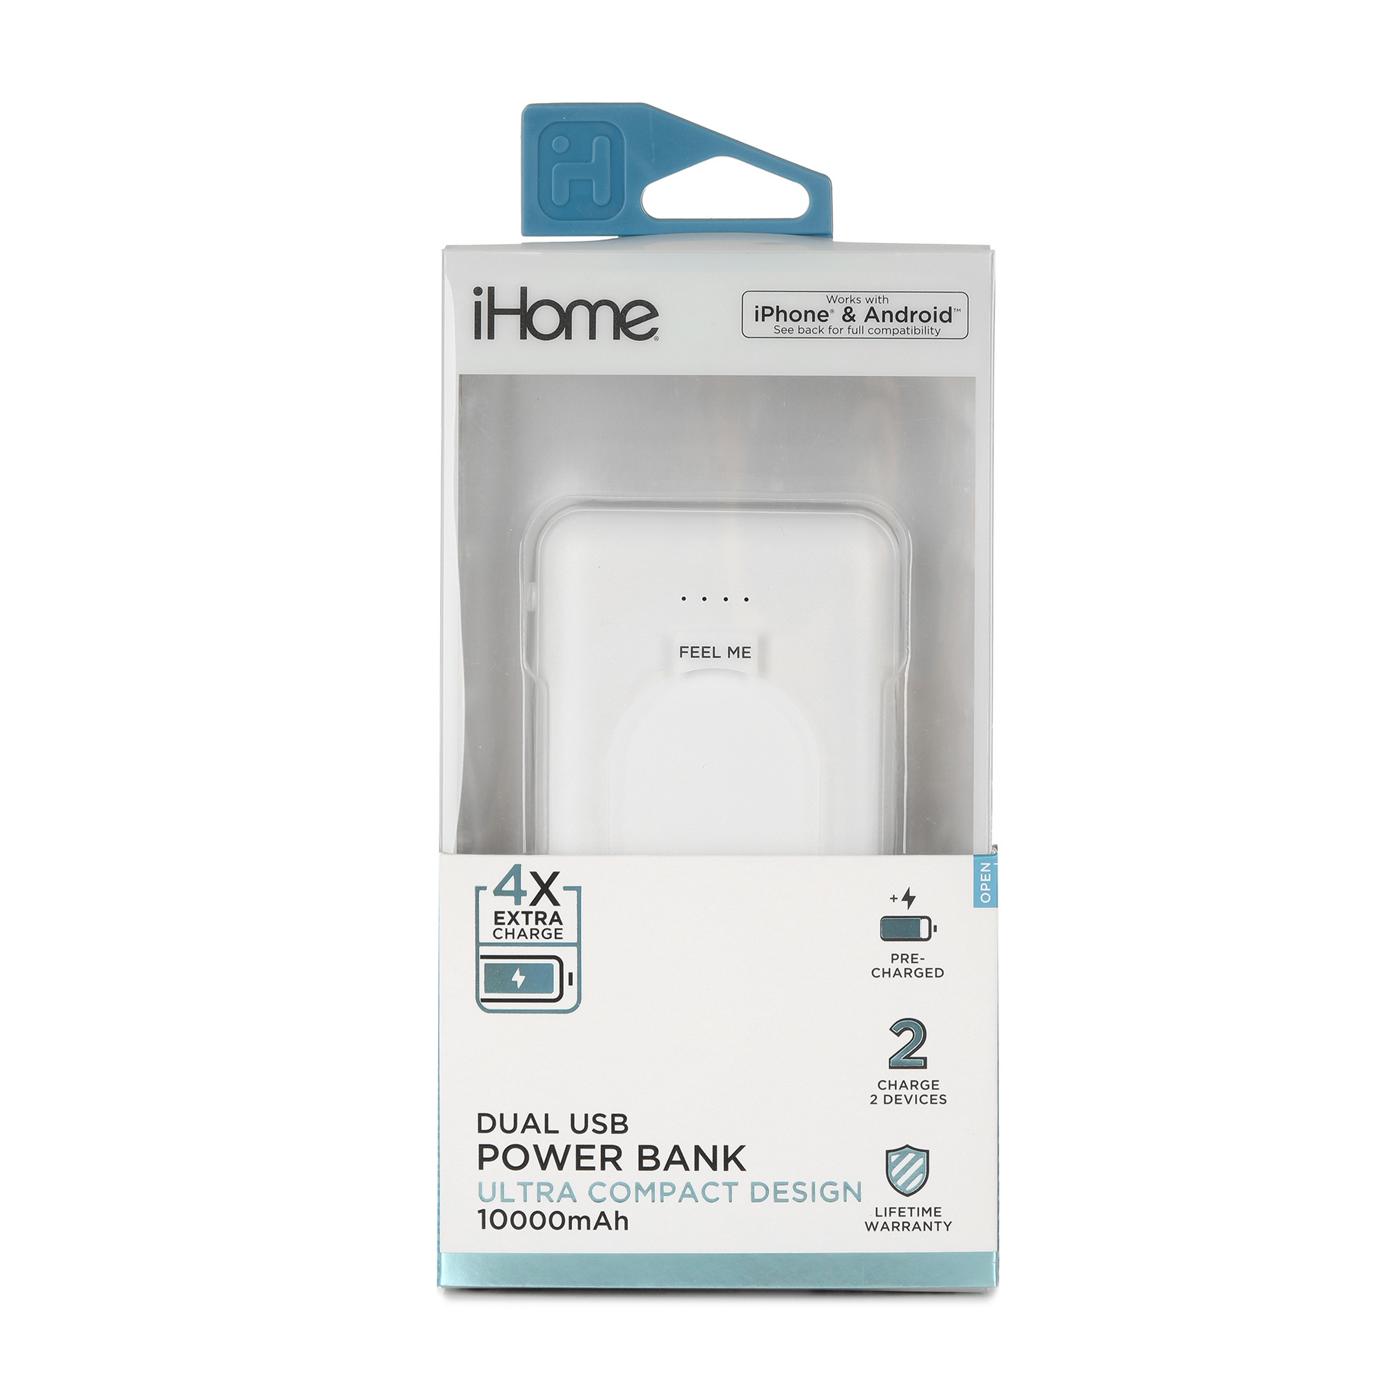 iHome Dual USB Portable Power Bank - White; image 1 of 2